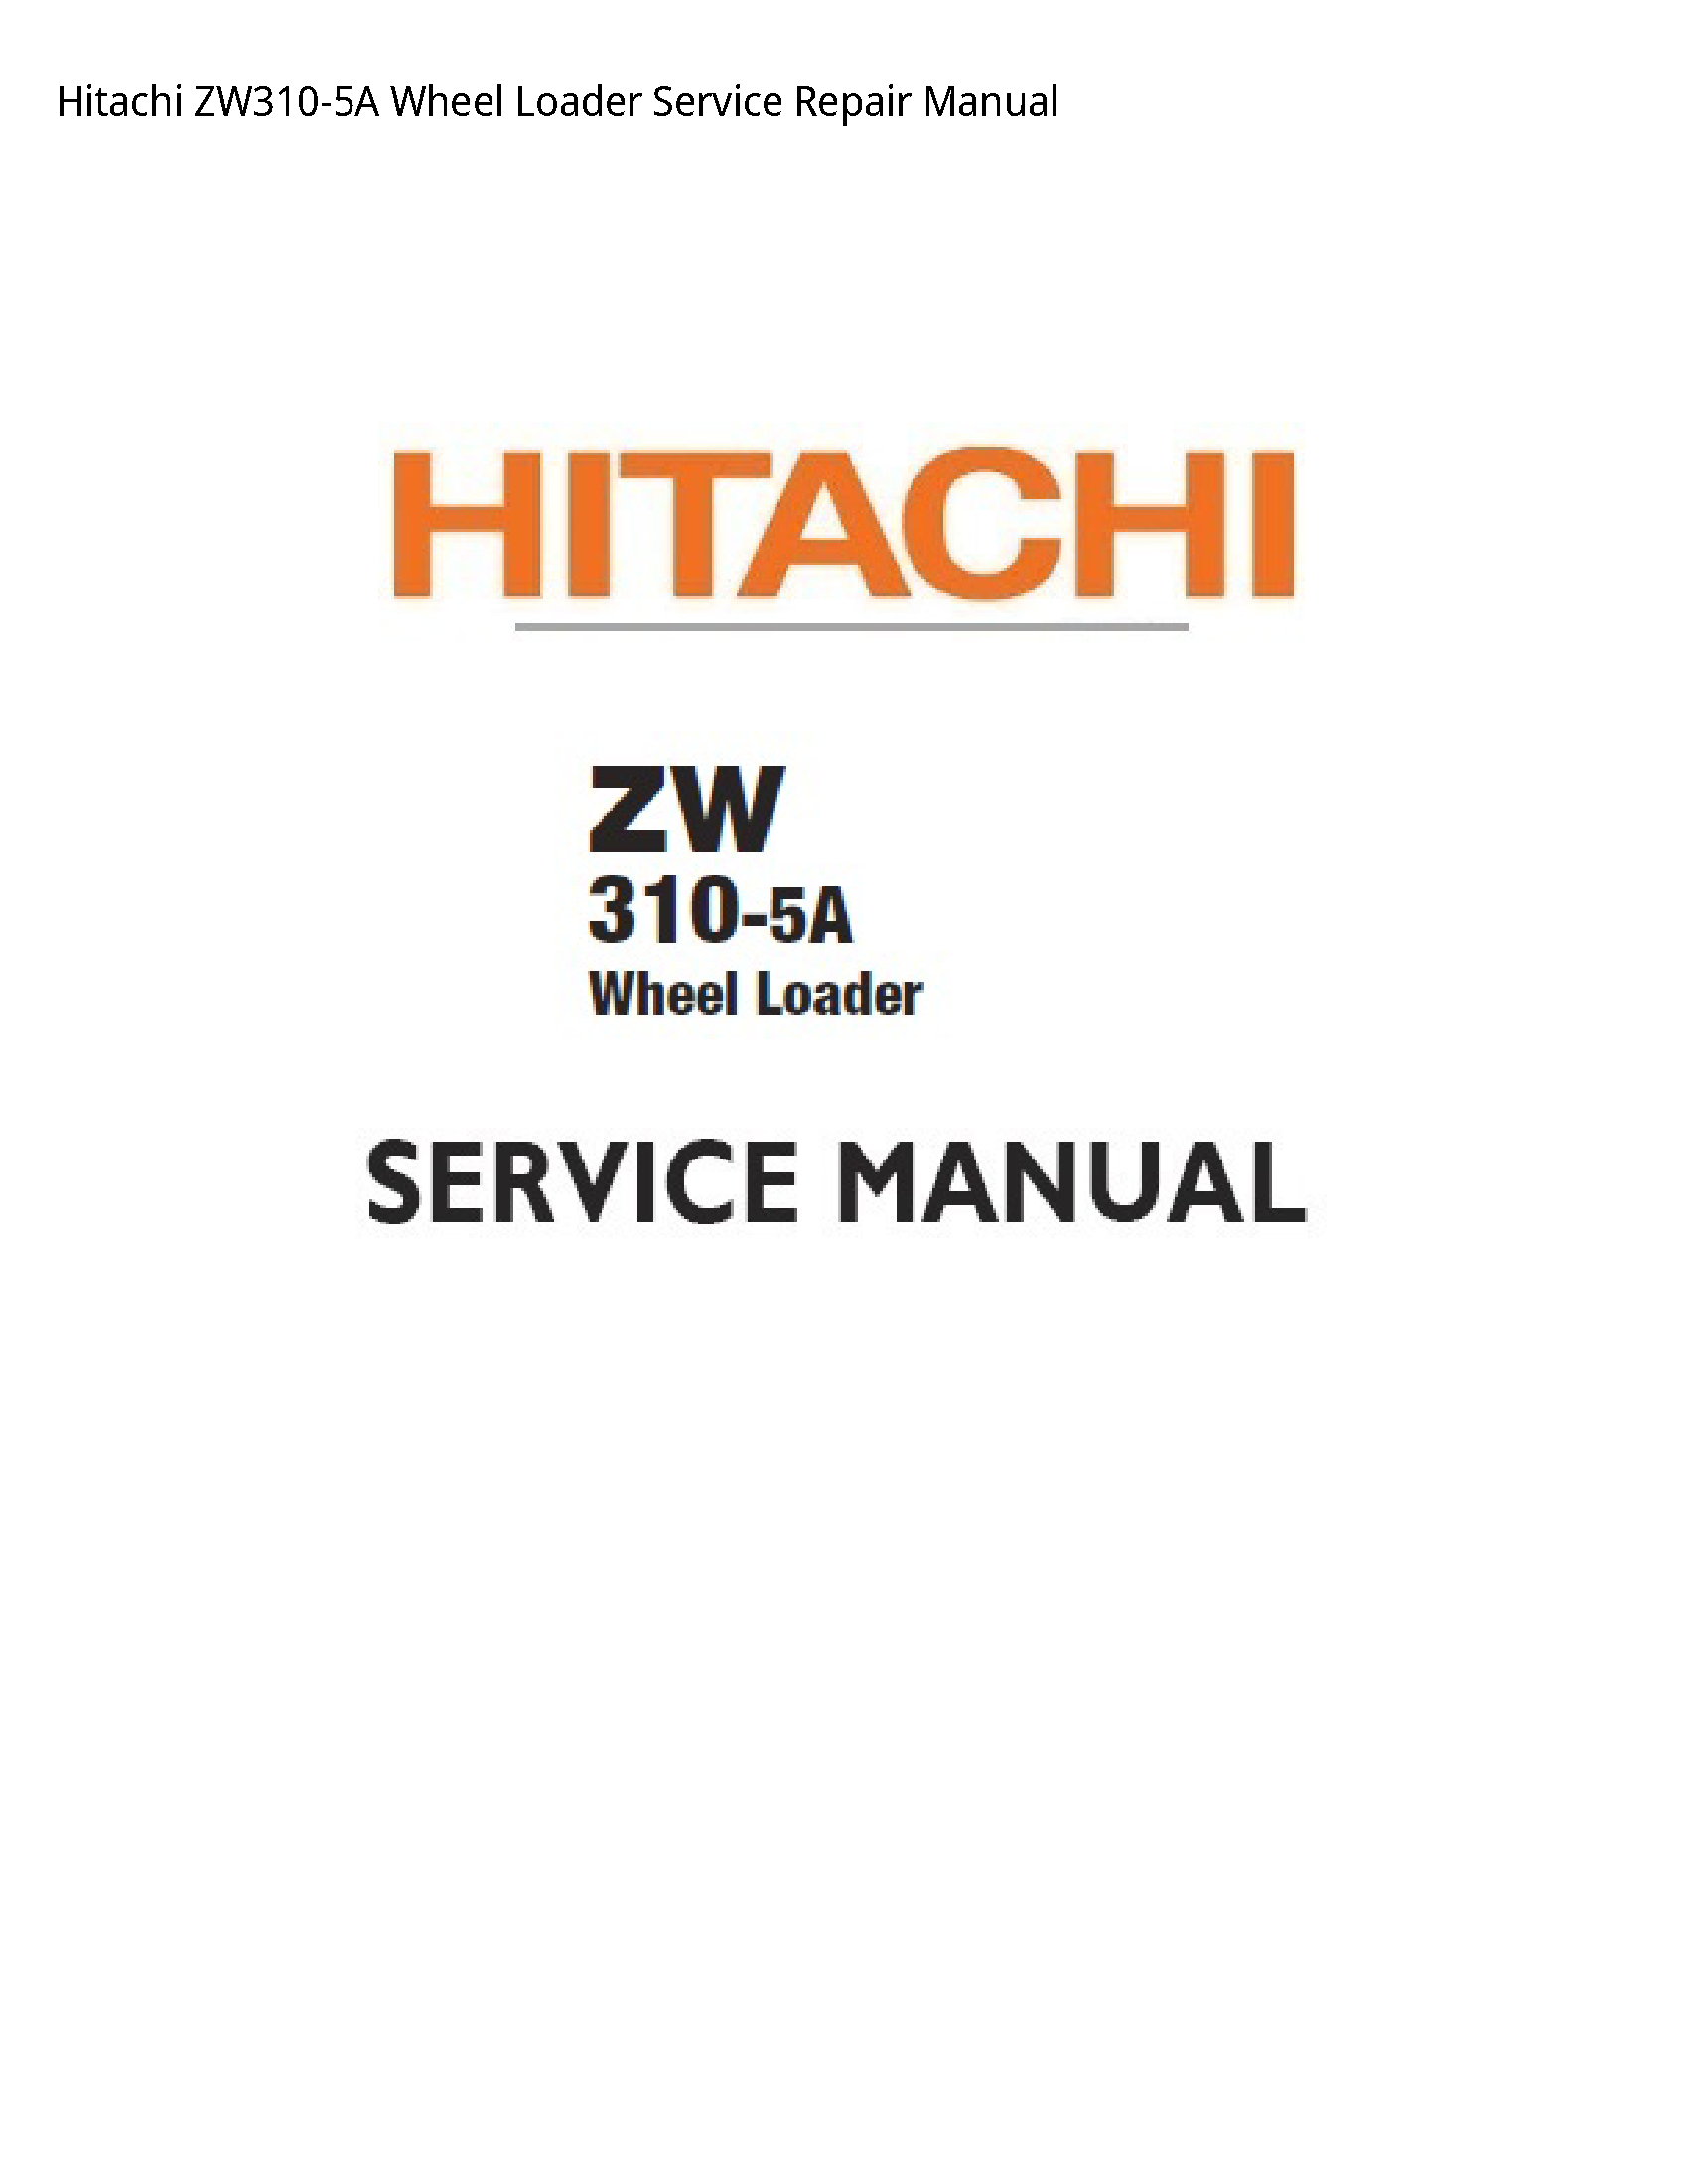 Hitachi ZW310-5A Wheel Loader manual